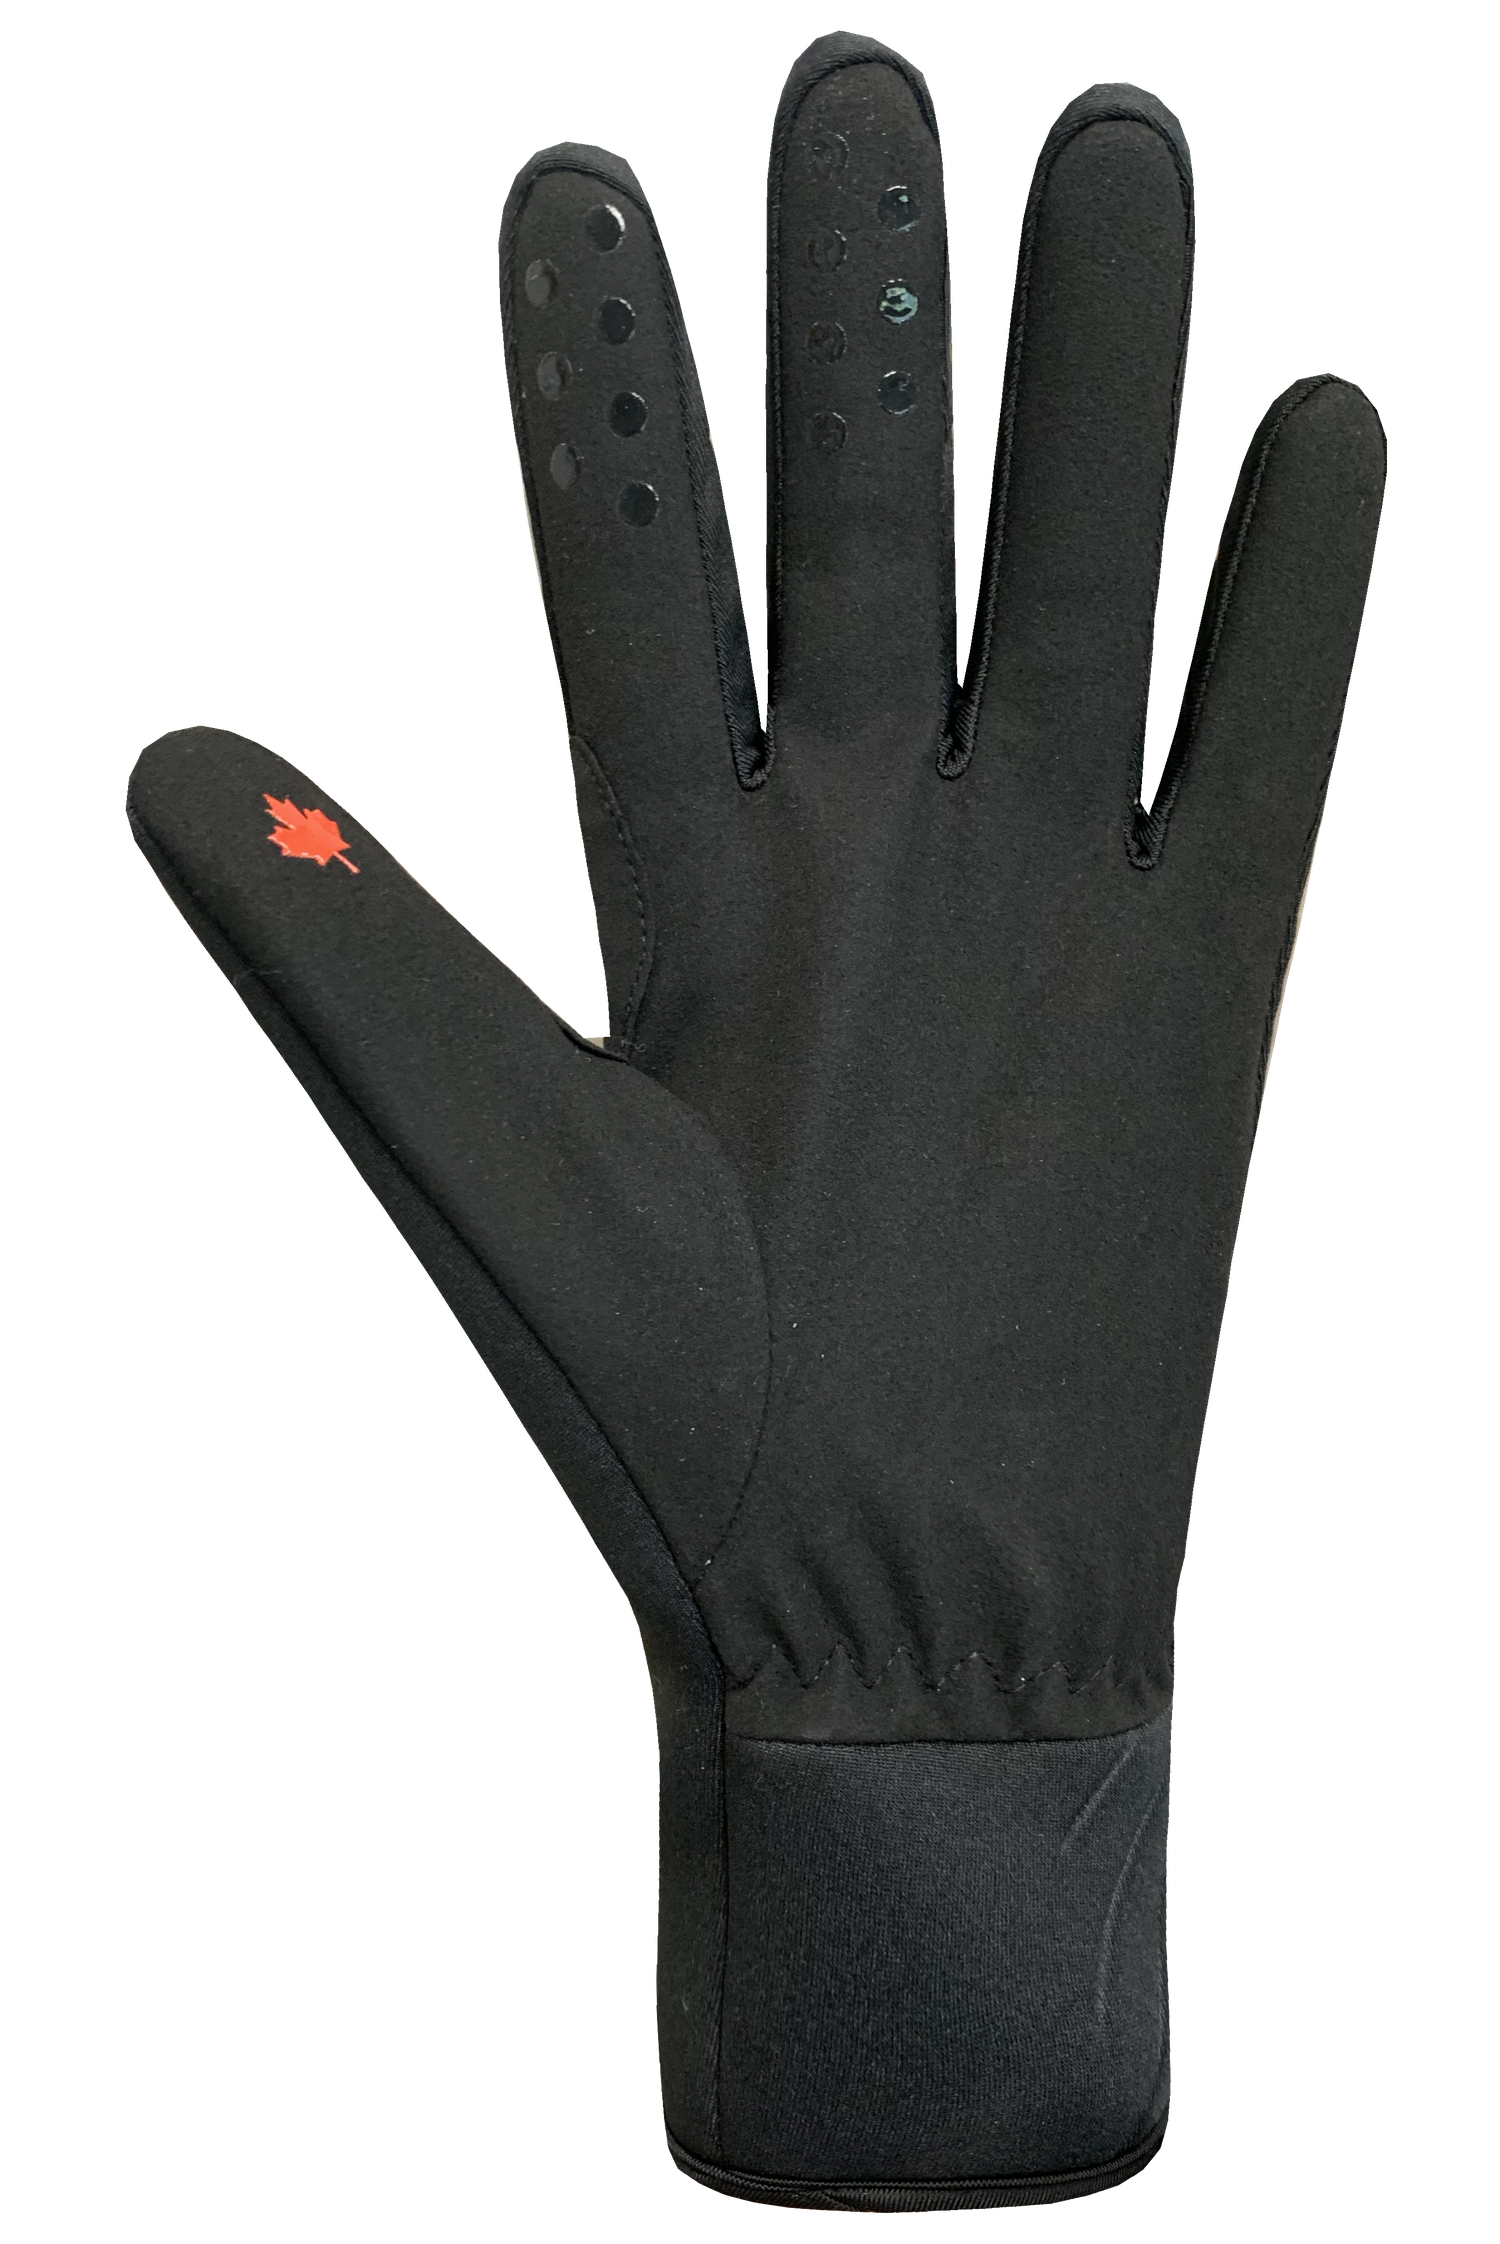 Nordiq Canada Neo Gloves - Adult, Black/Red